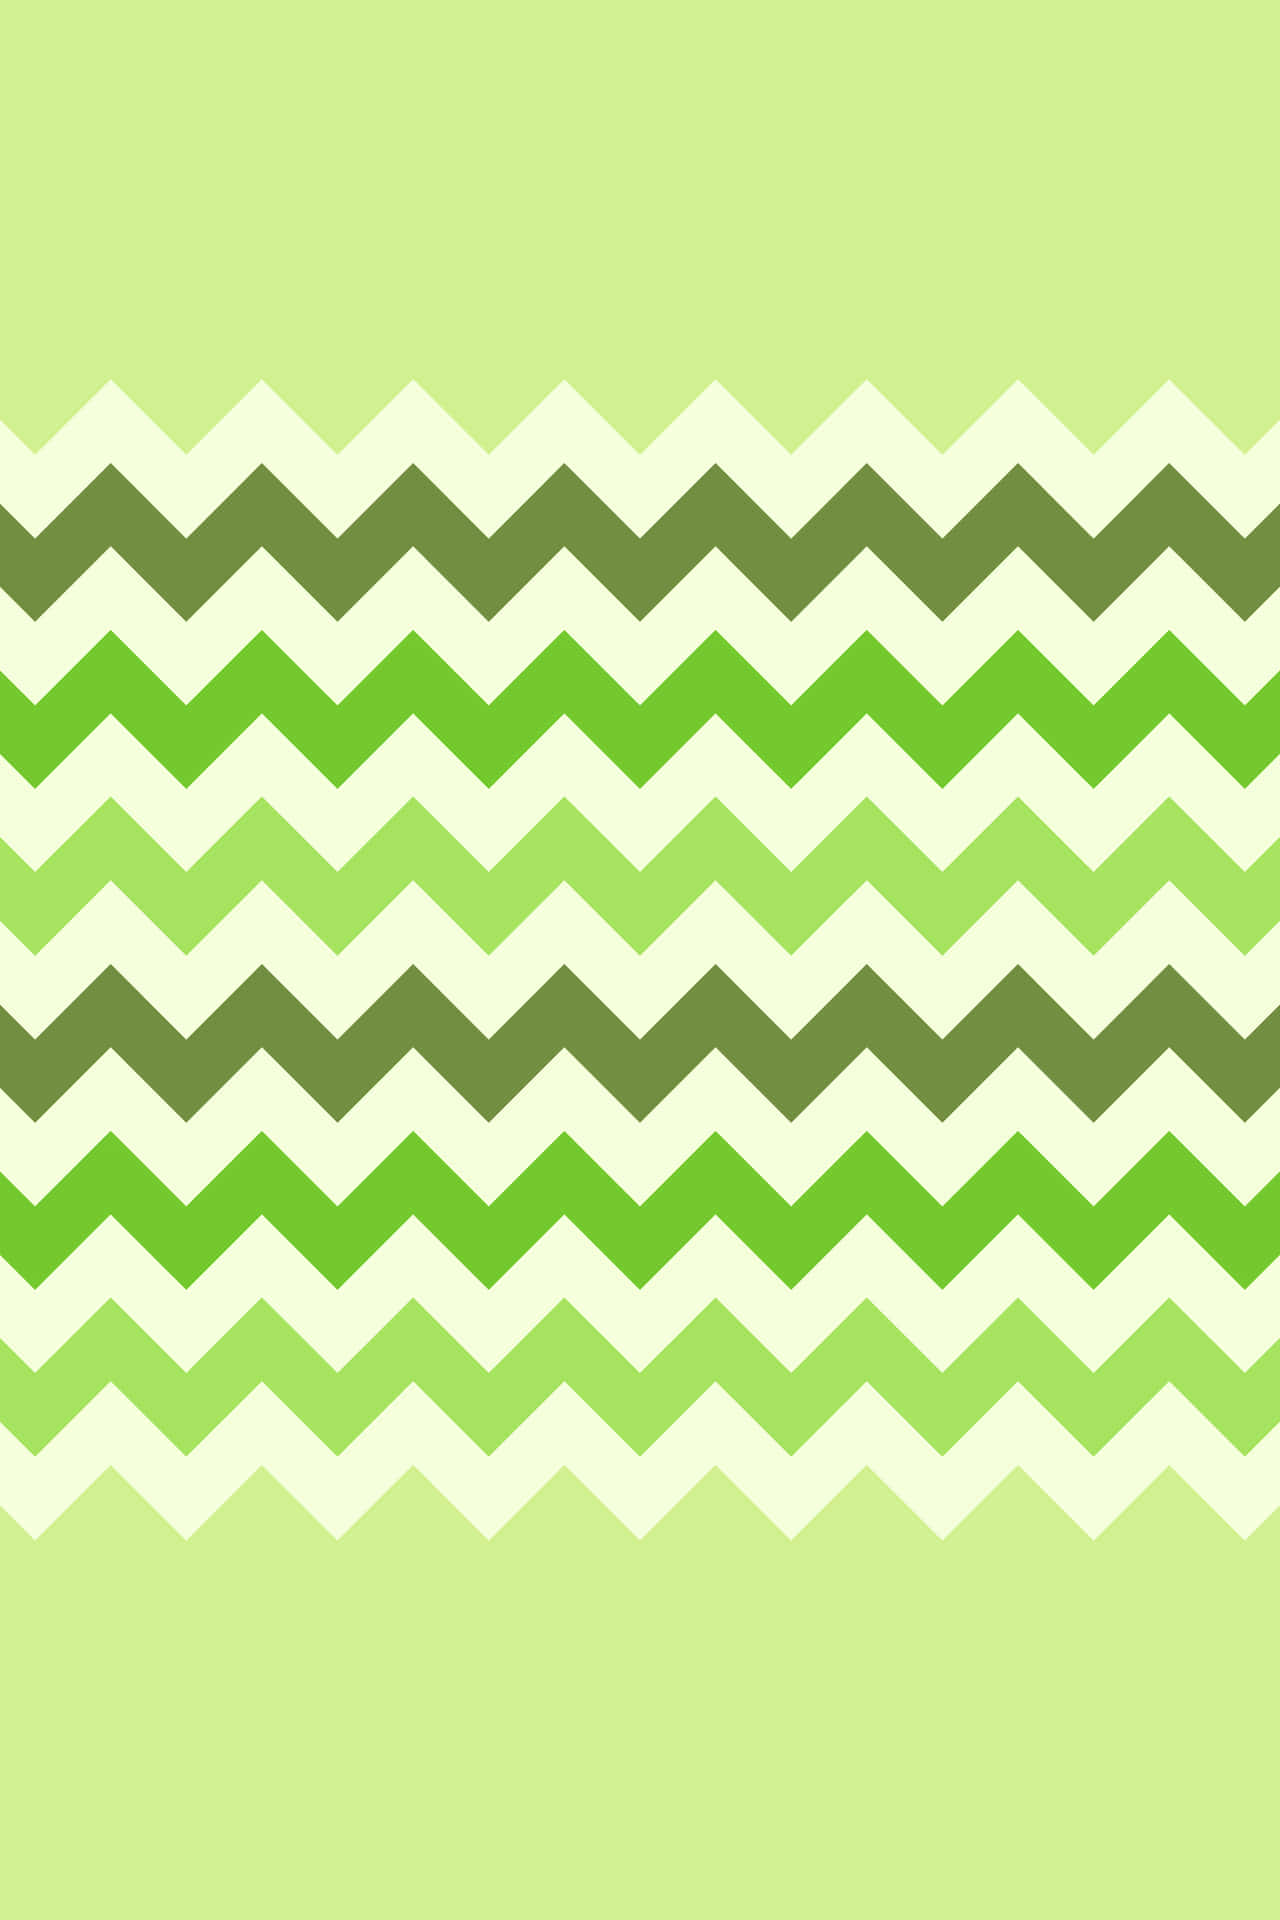 A Green And White Chevron Pattern